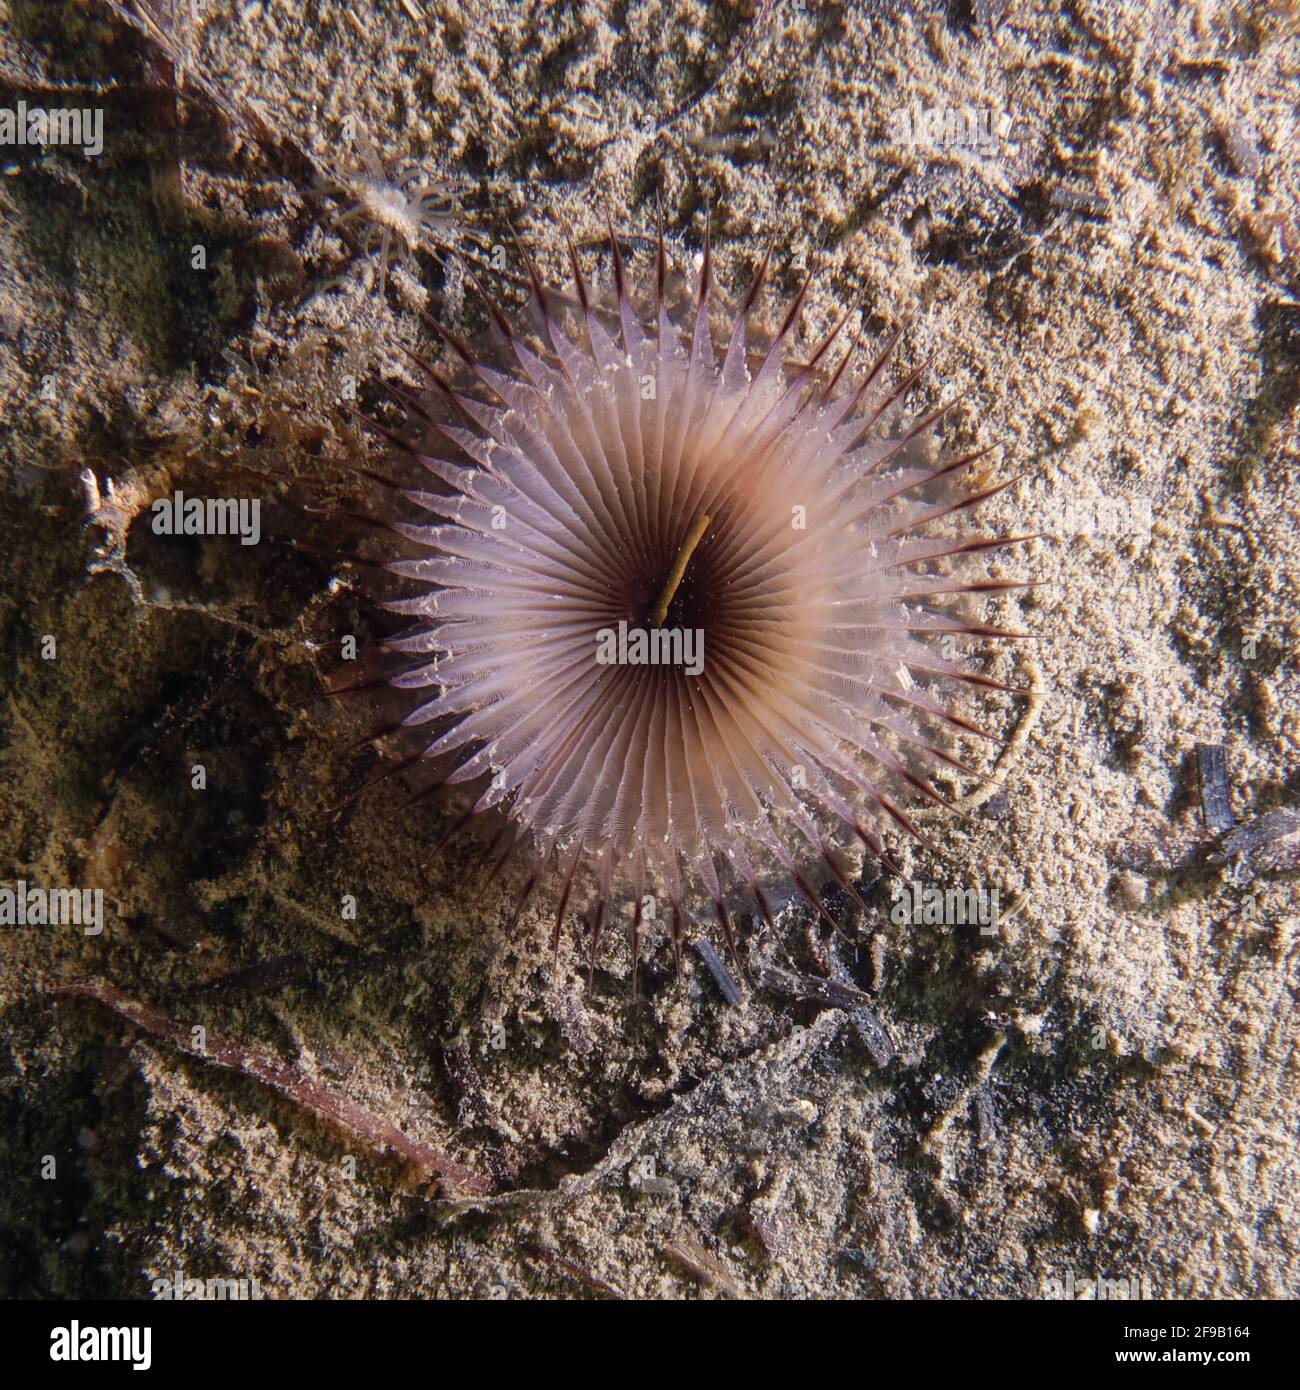 Slime tube worm o Slime piuma (Myxicola infundibulum) In una laguna costiera mediterranea Foto Stock